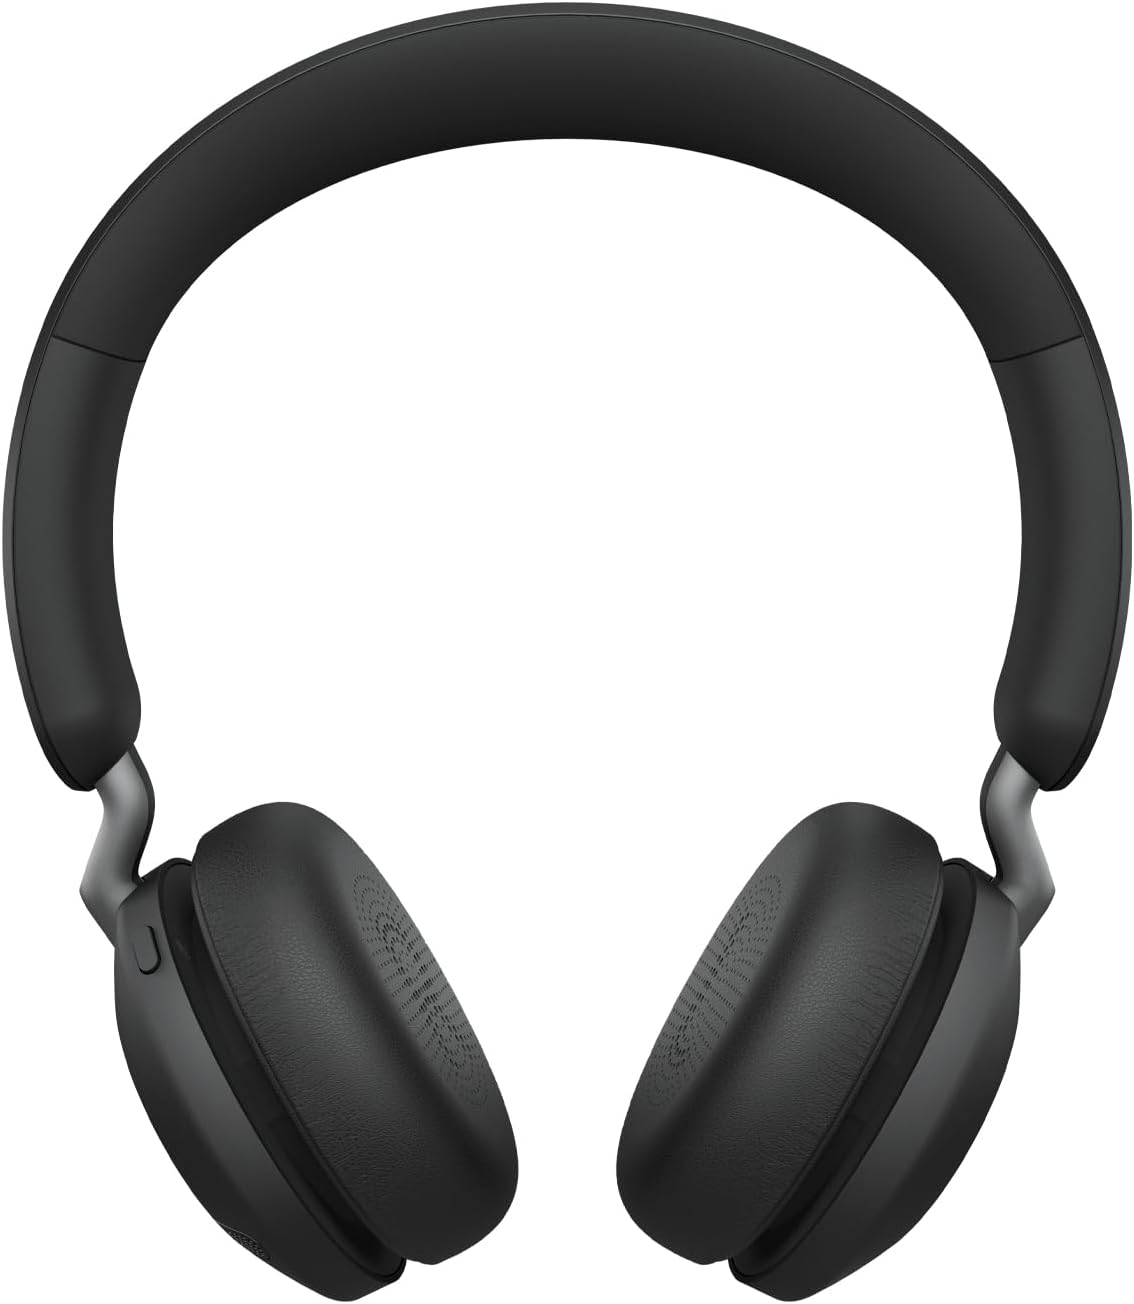 Jabra Elite 45h Wireless On-Ear Headphones - Black - New